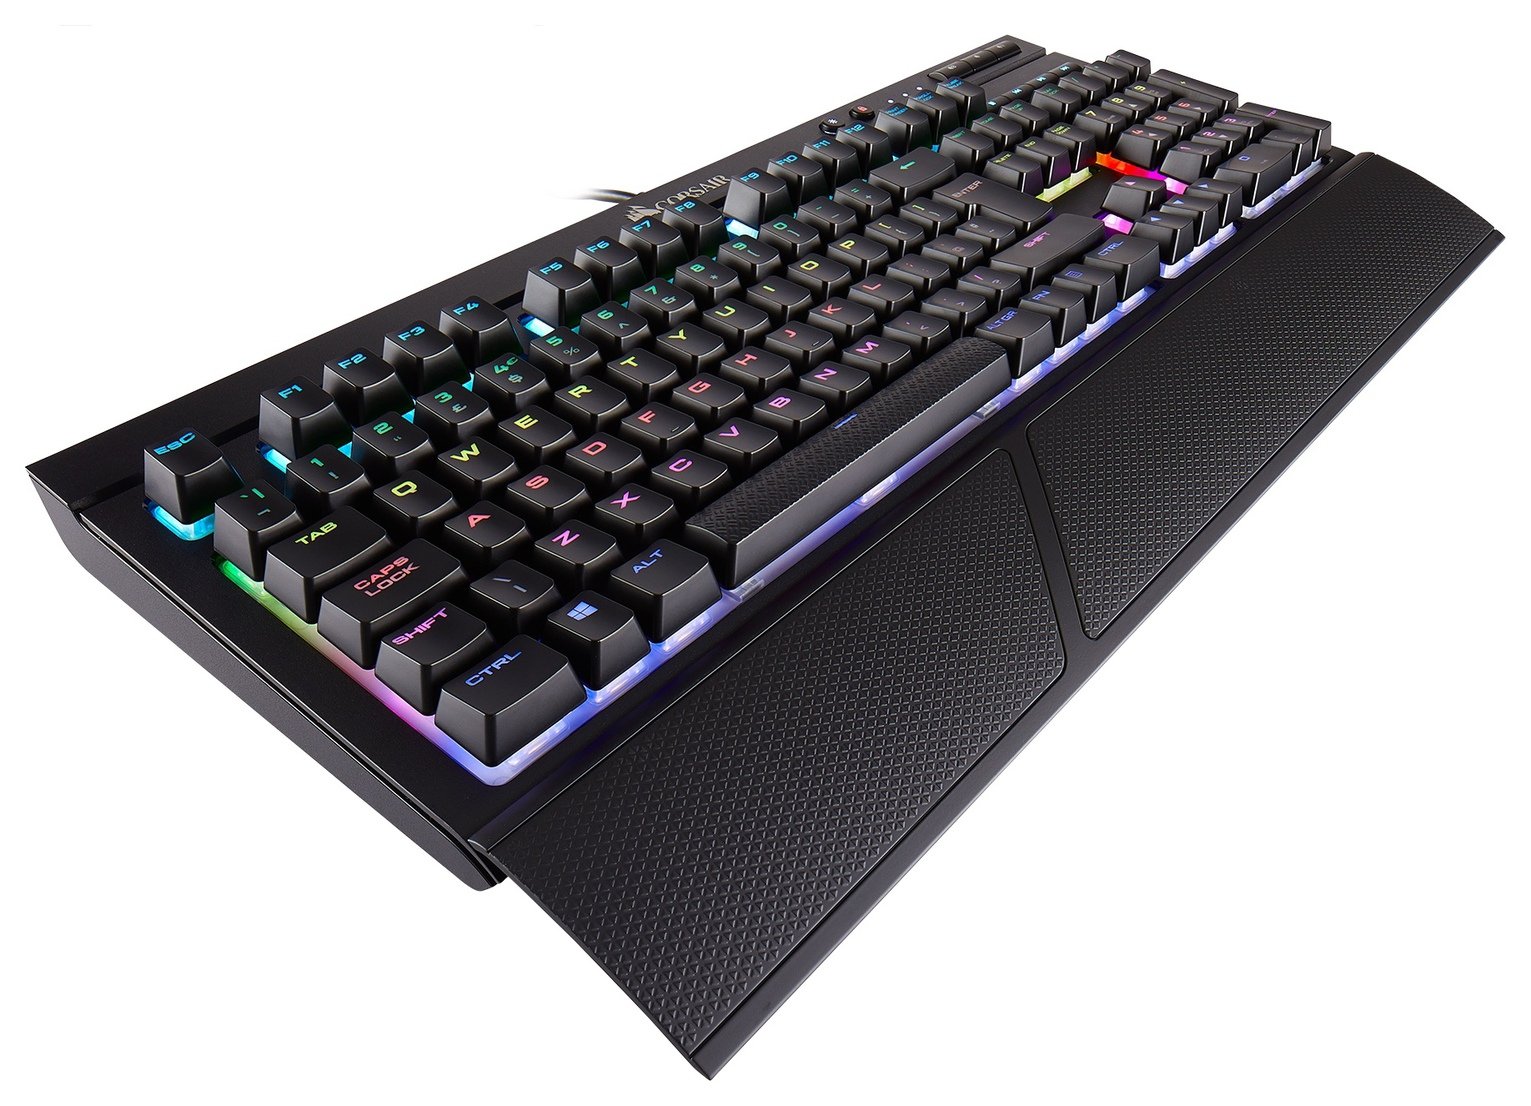 Corsair K68 RGB Mechanical Gaming Keyboard Review